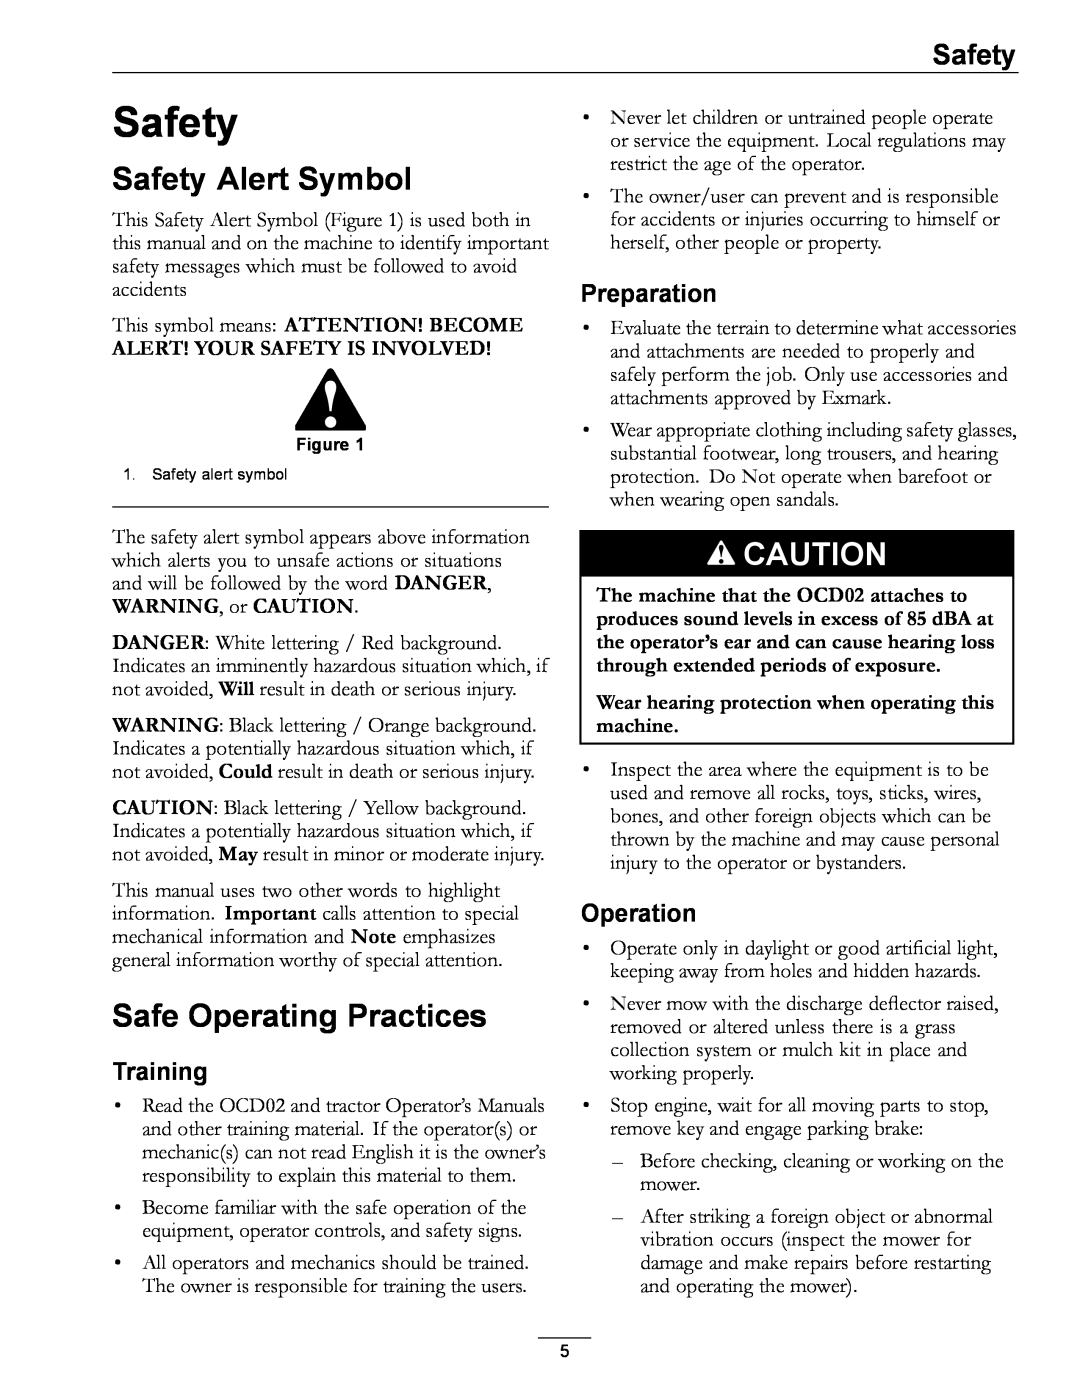 Exmark OCD02 manual Safety Alert Symbol, Safe Operating Practices, Training, Preparation, Operation 